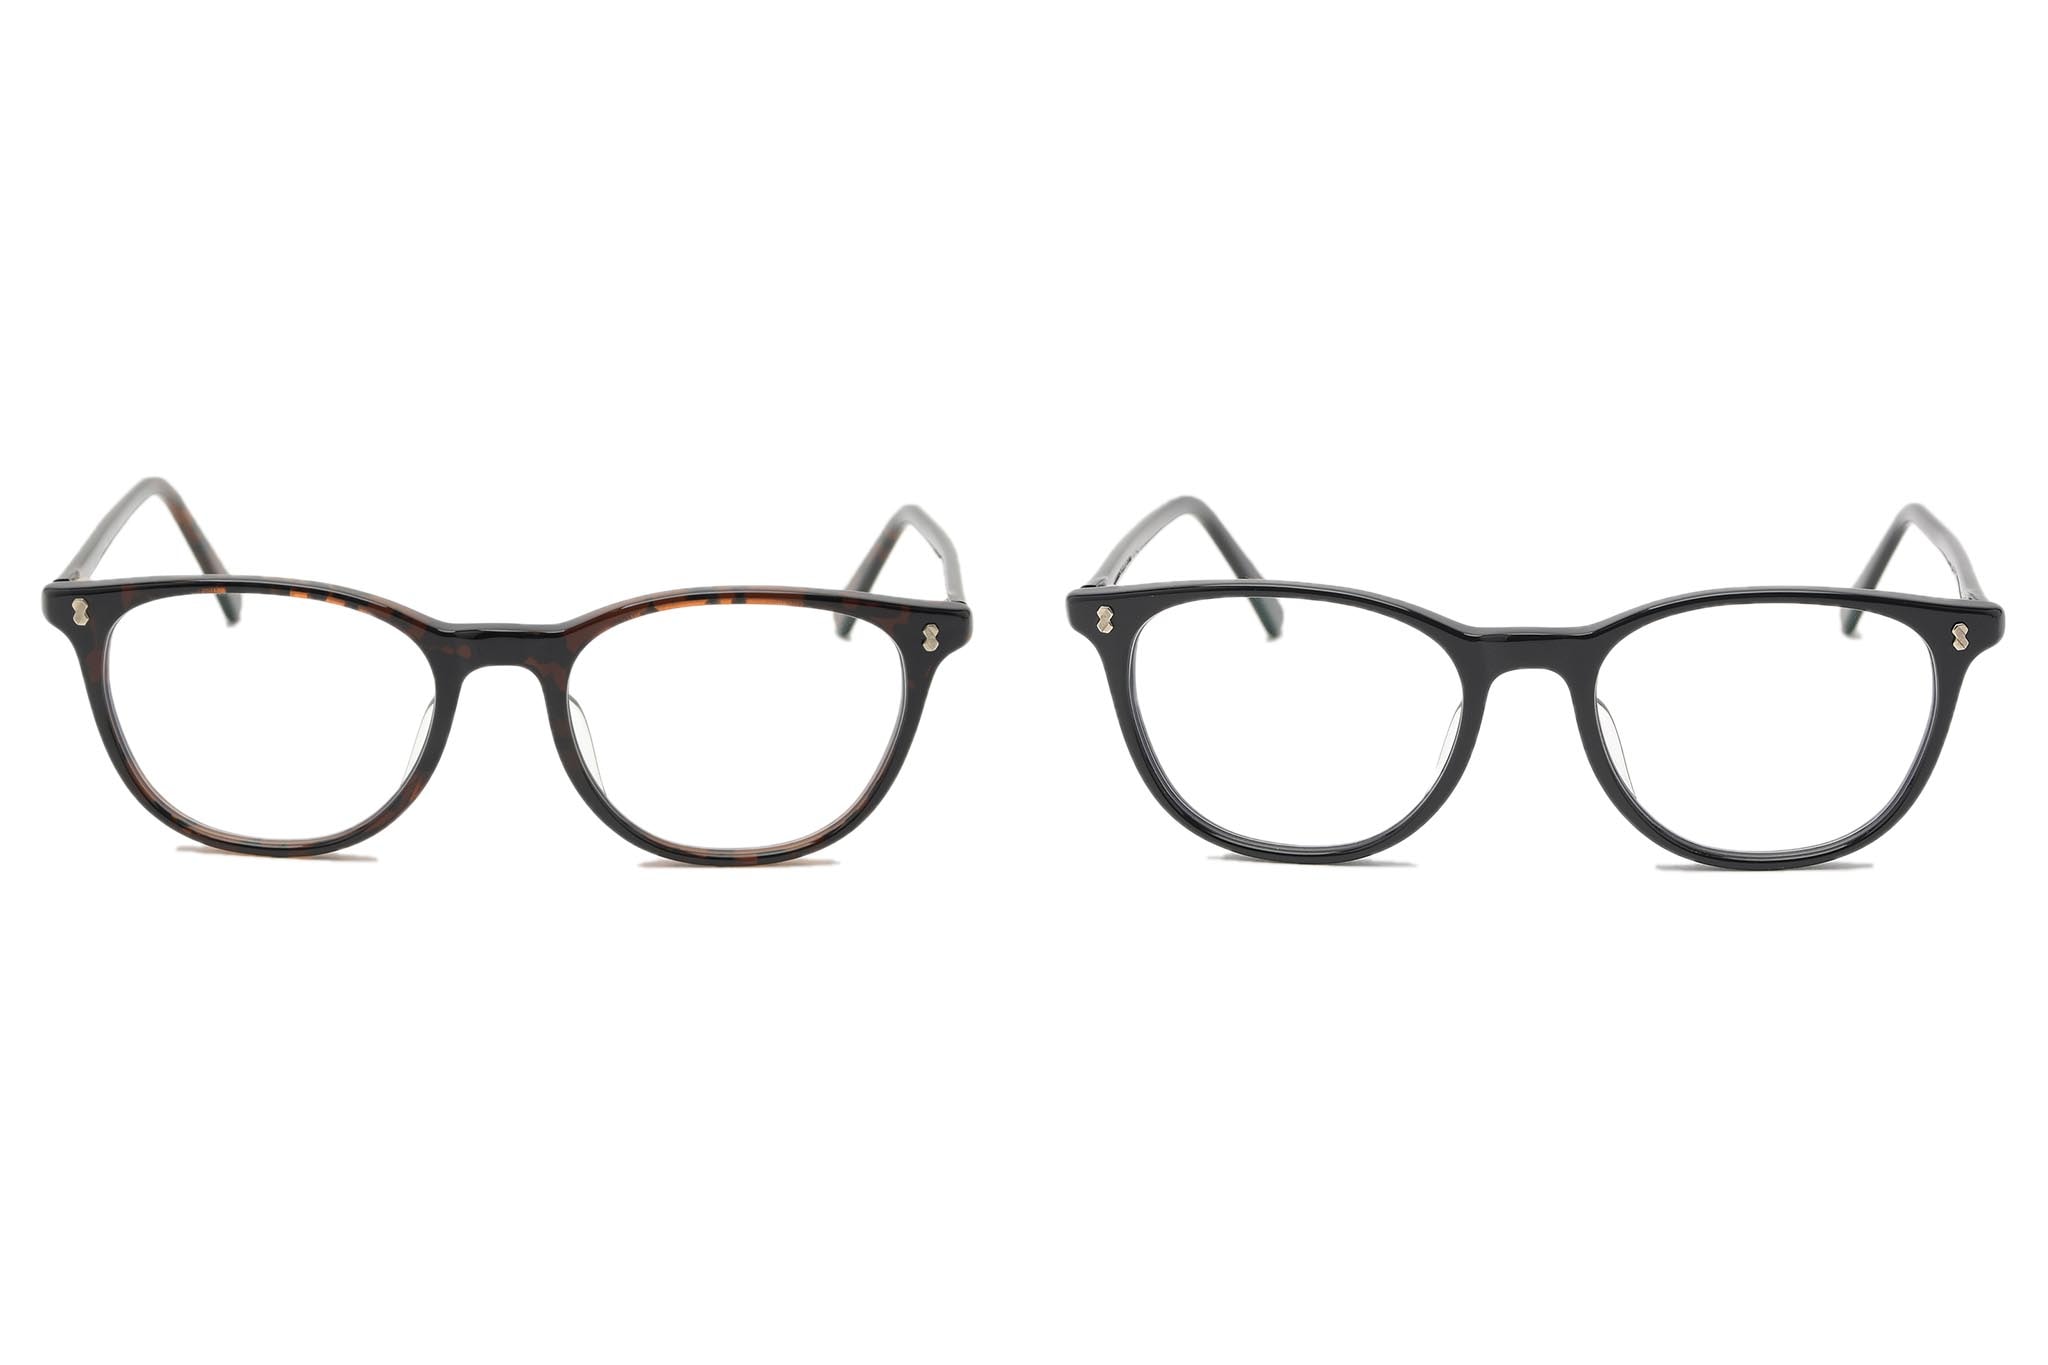 SOPHNET. x 金子眼鏡推出全新 2018 春夏眼鏡系列